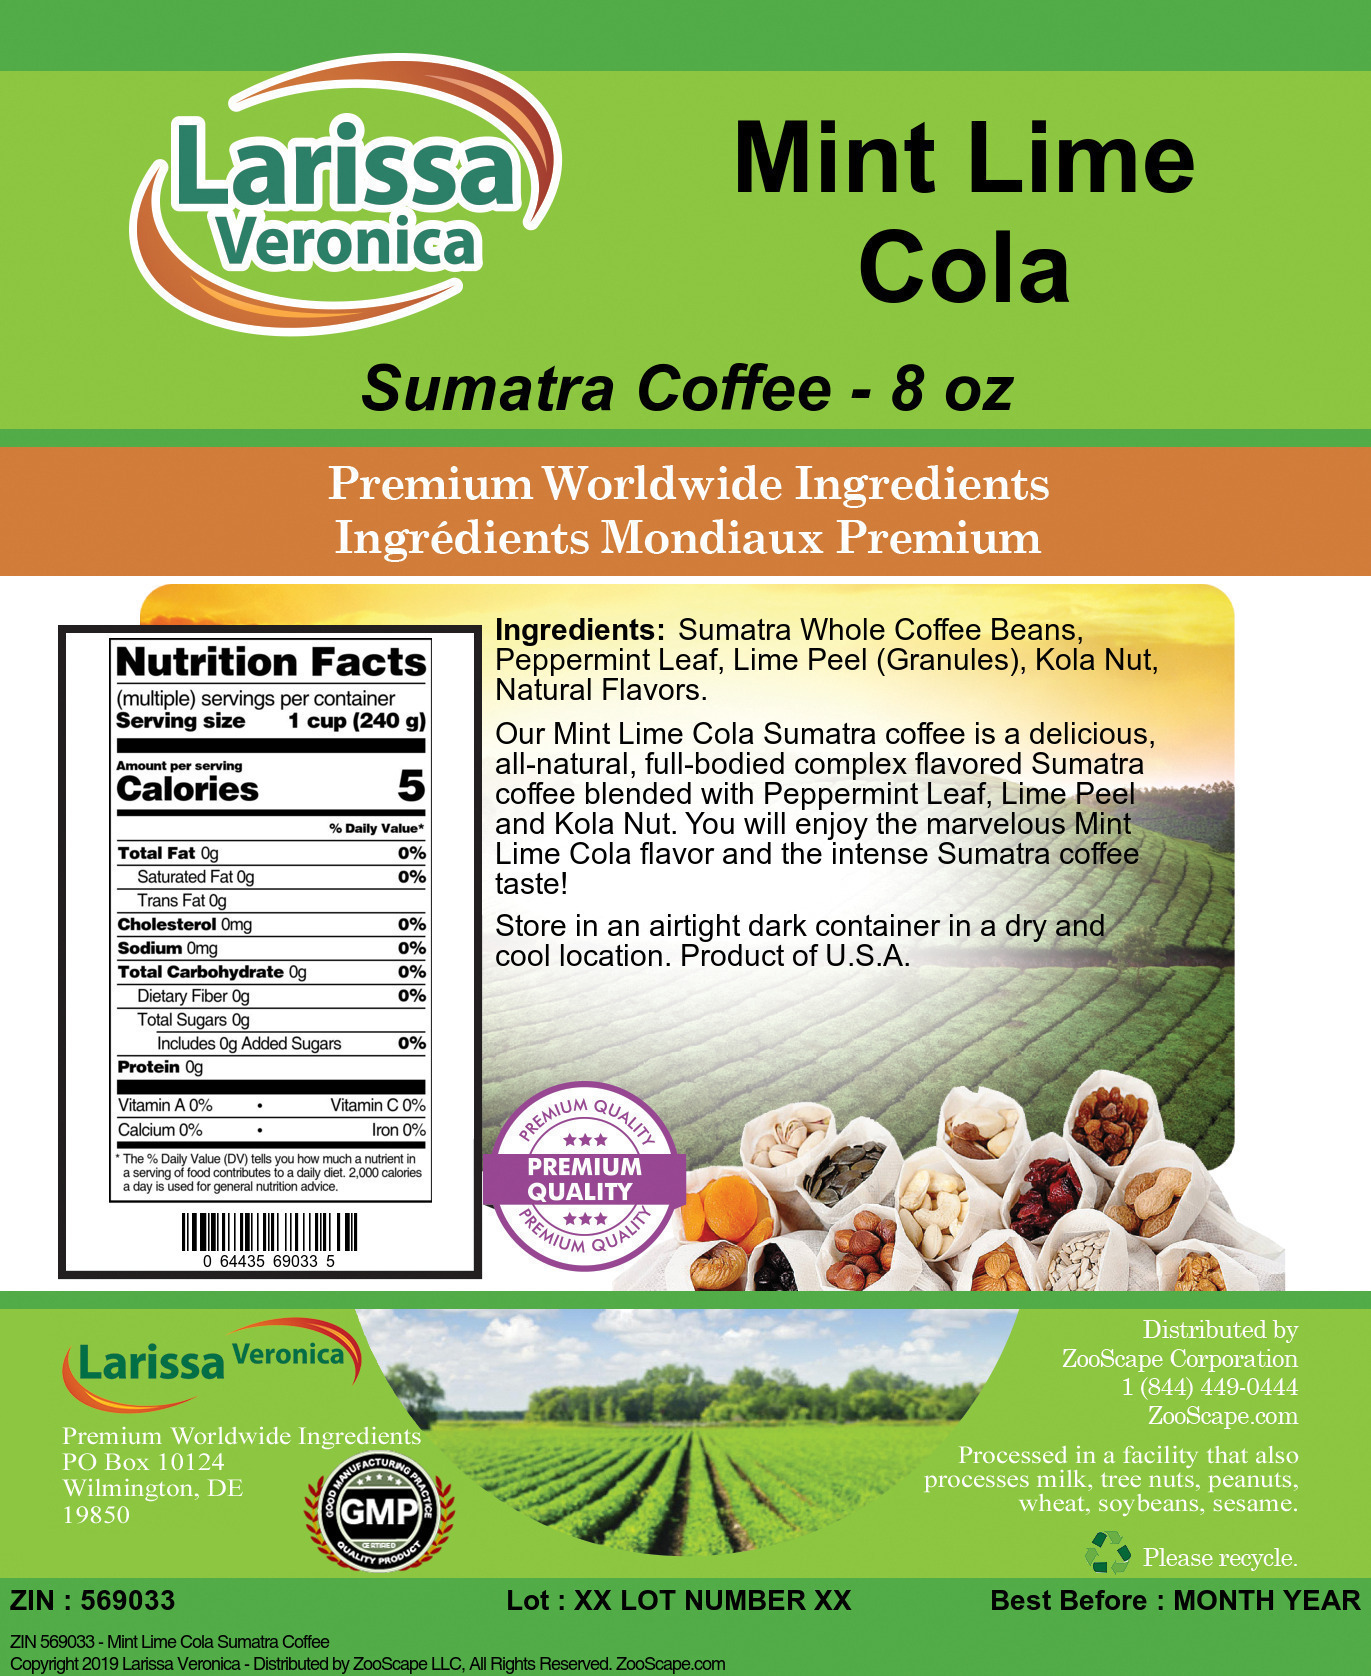 Mint Lime Cola Sumatra Coffee - Label